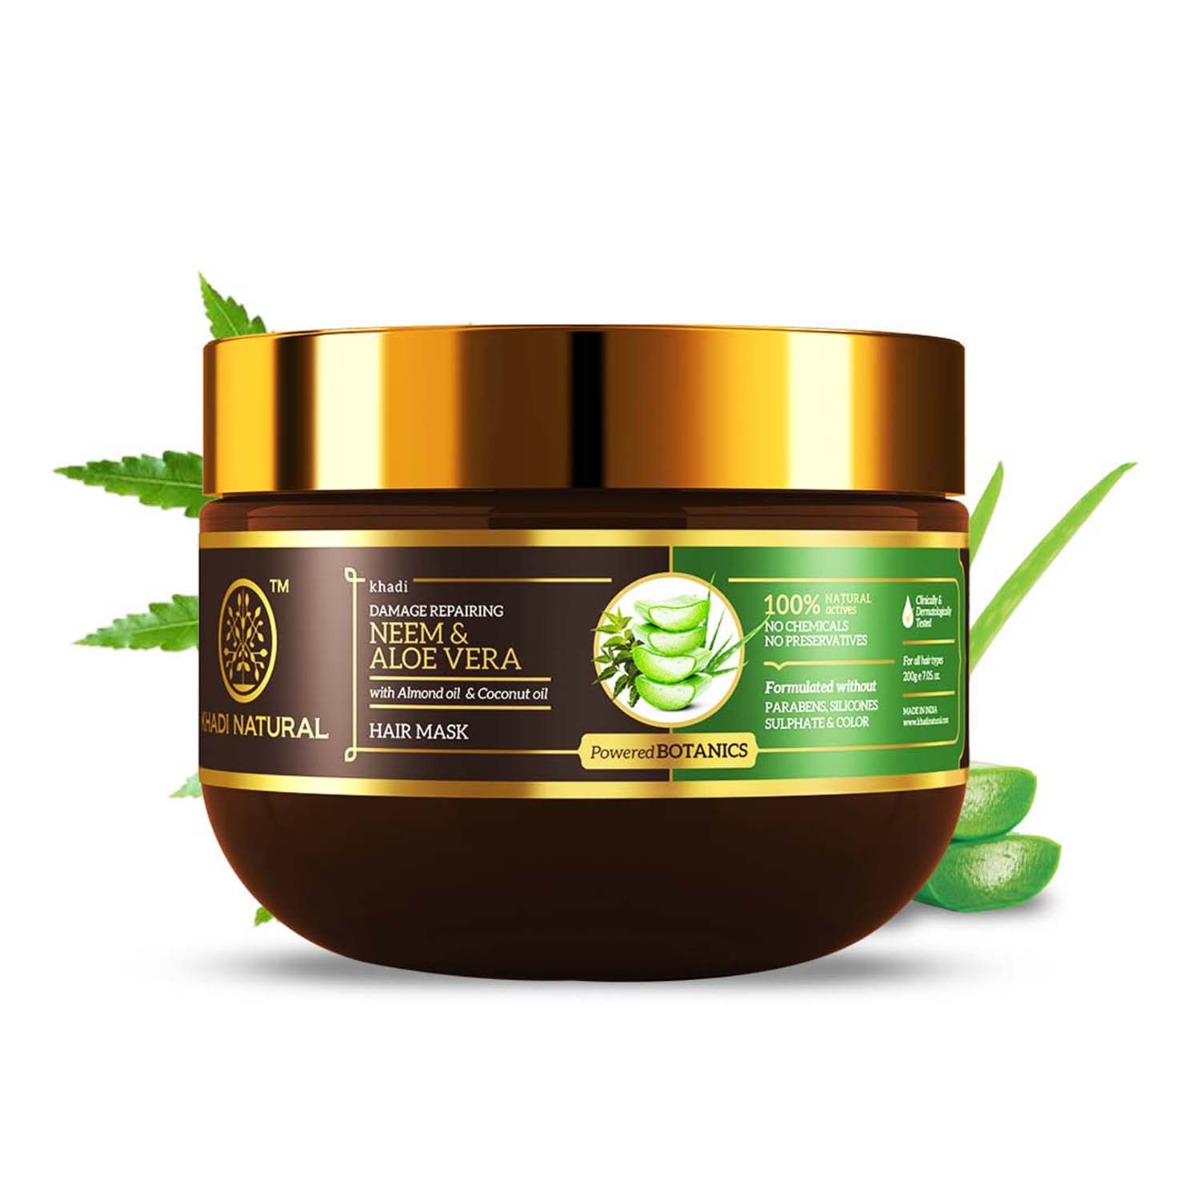 Khadi Natural Neem & Aloevera With Almond Oil & Coconut Oil, Hair Mask - Powered Botanics, 200gm